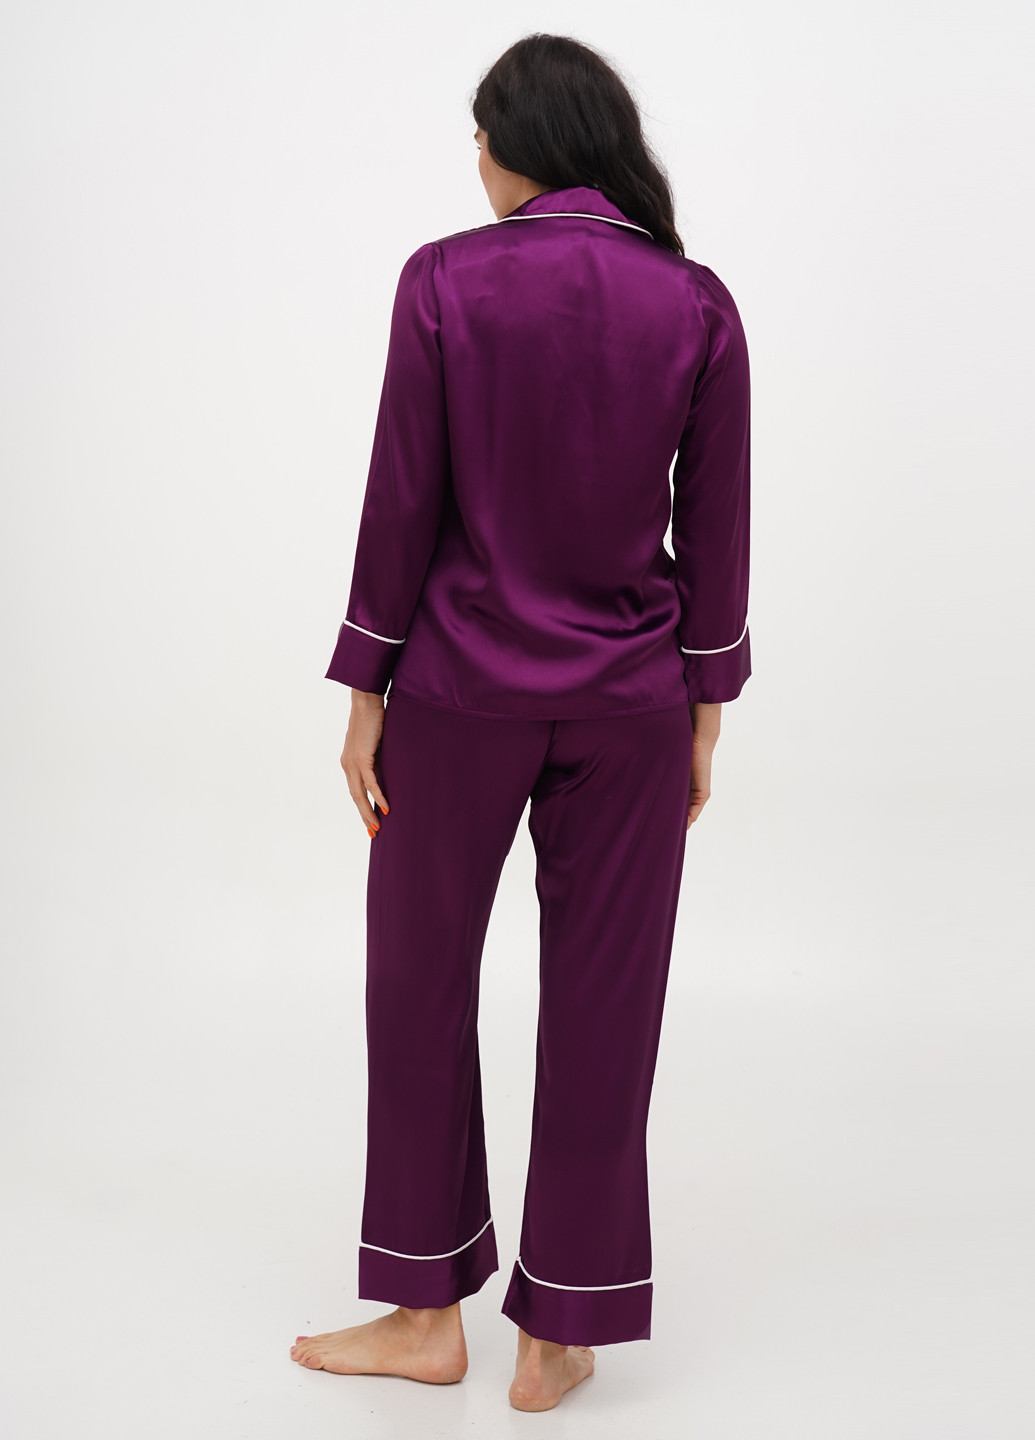 Фиолетовая всесезон пижама (рубашка, брюки) рубашка + брюки No Brand